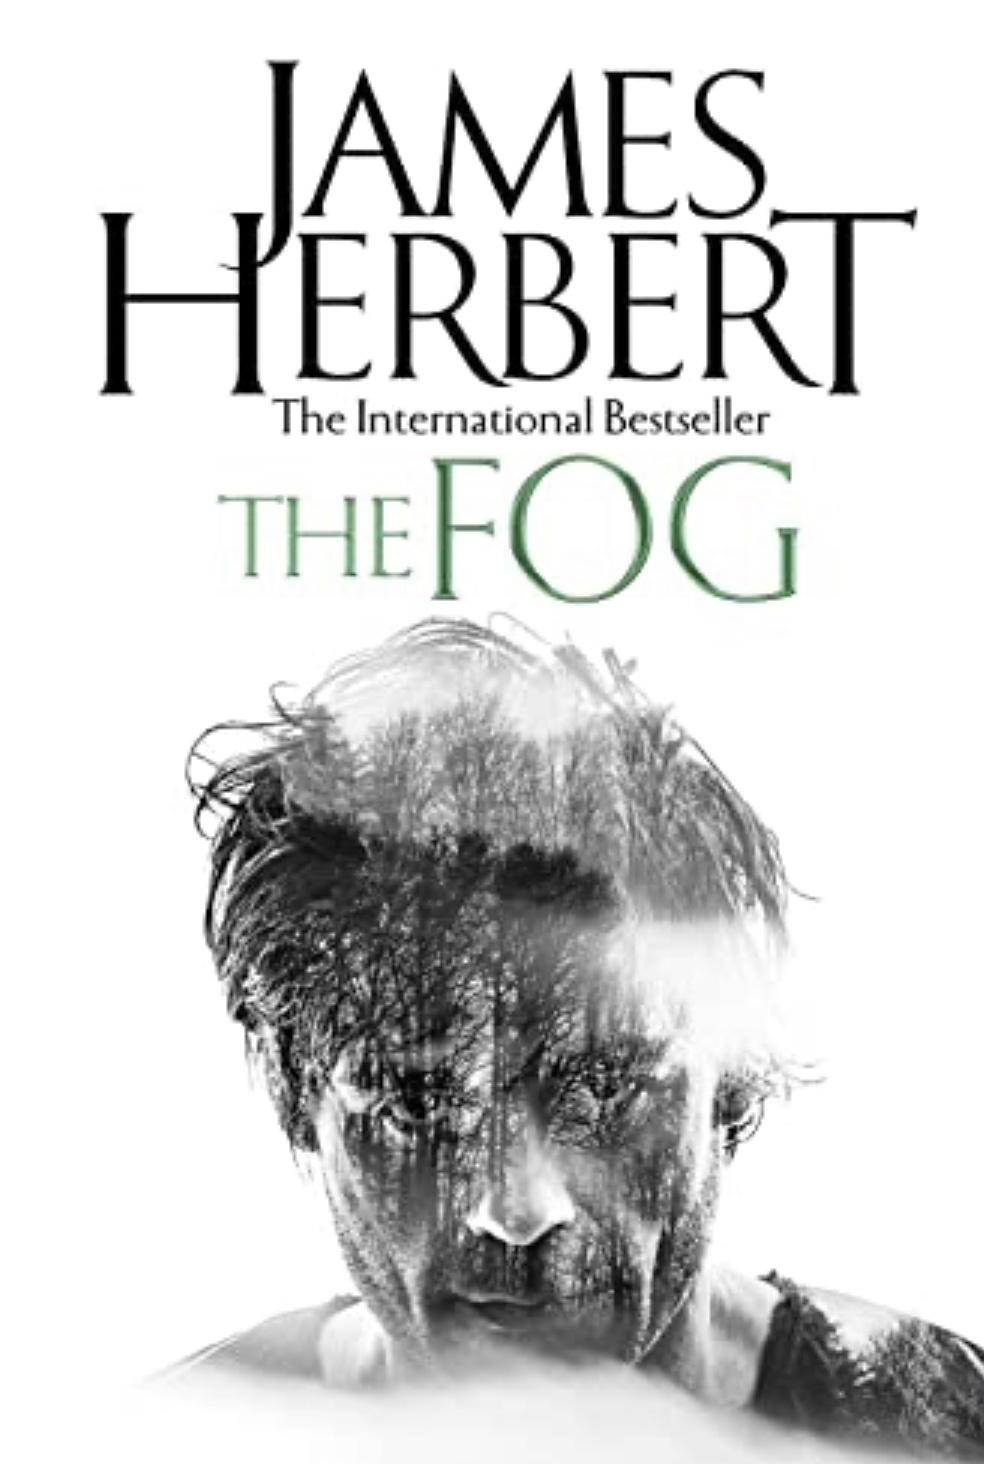 The Fog by James Herbert